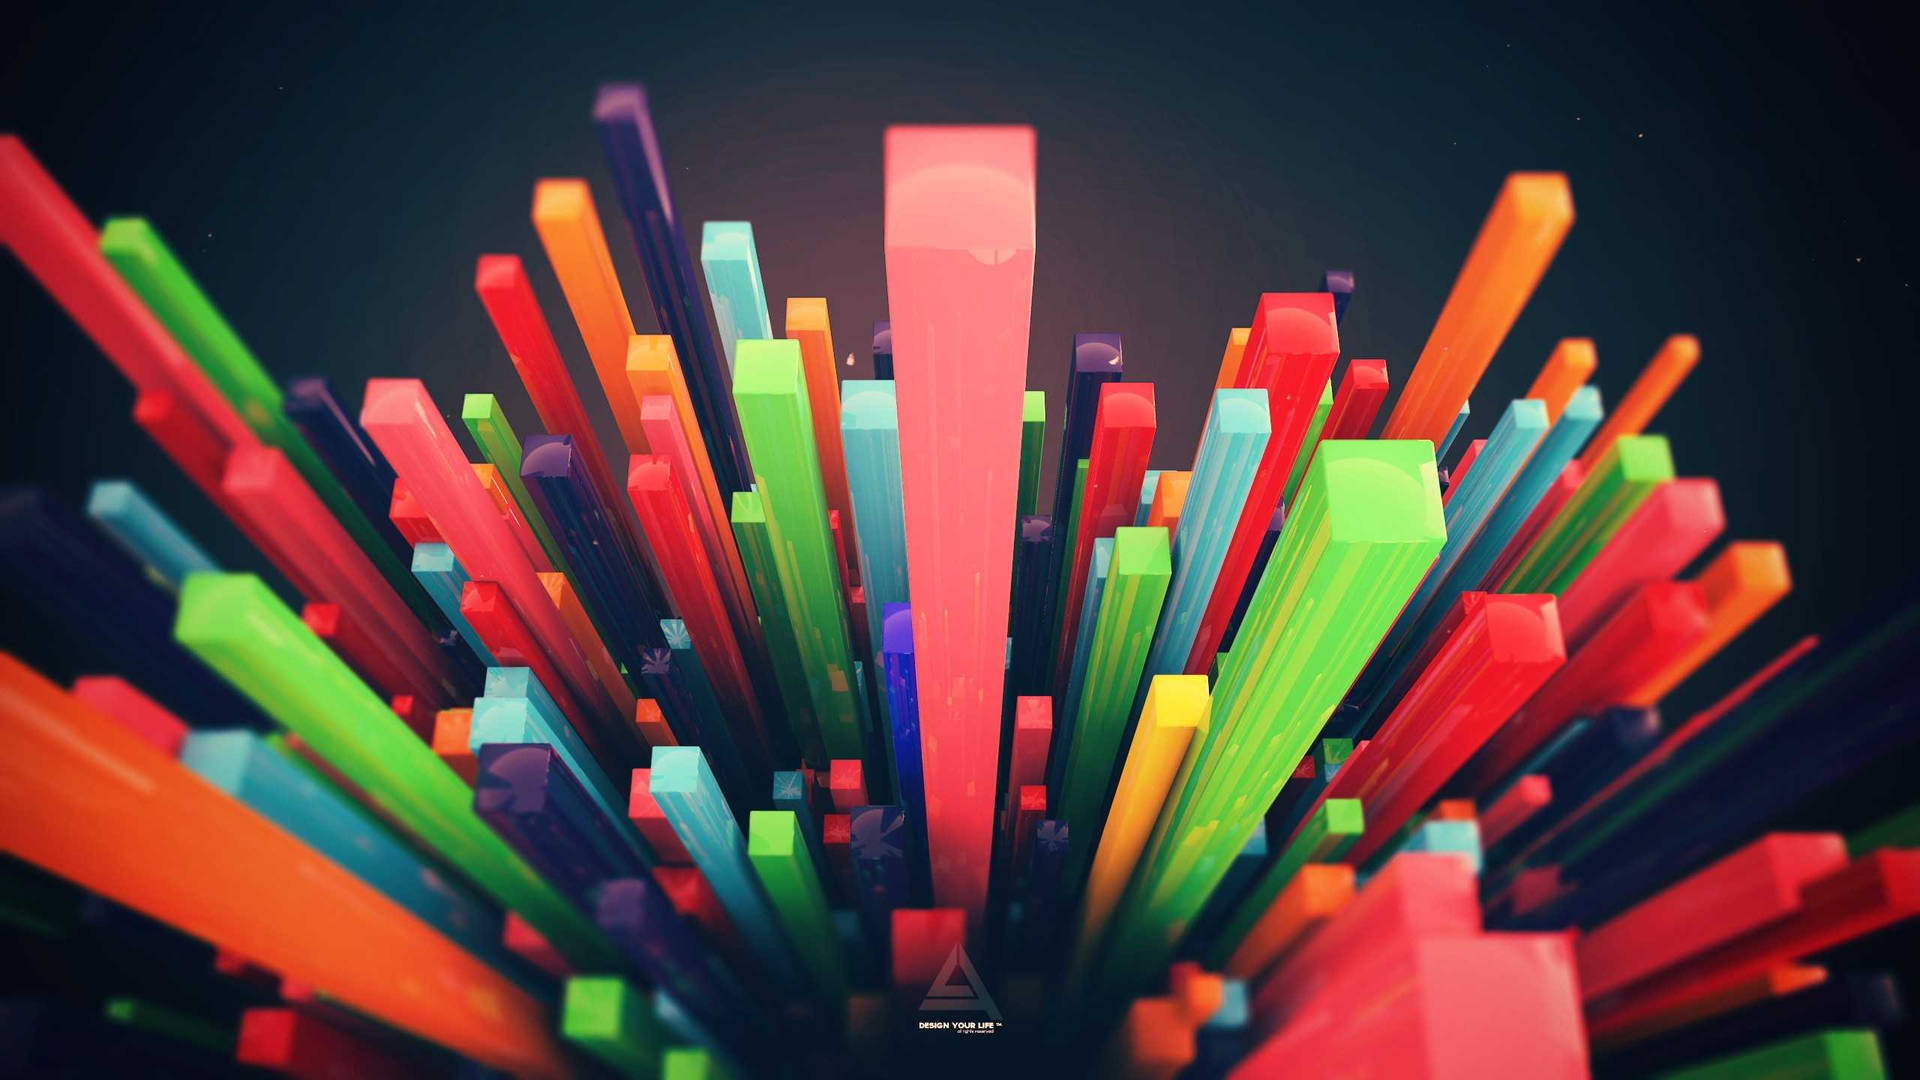 " Enjoy the versatile and vibrant hues of this Colorful Plastic Sticks arrangement! " Wallpaper